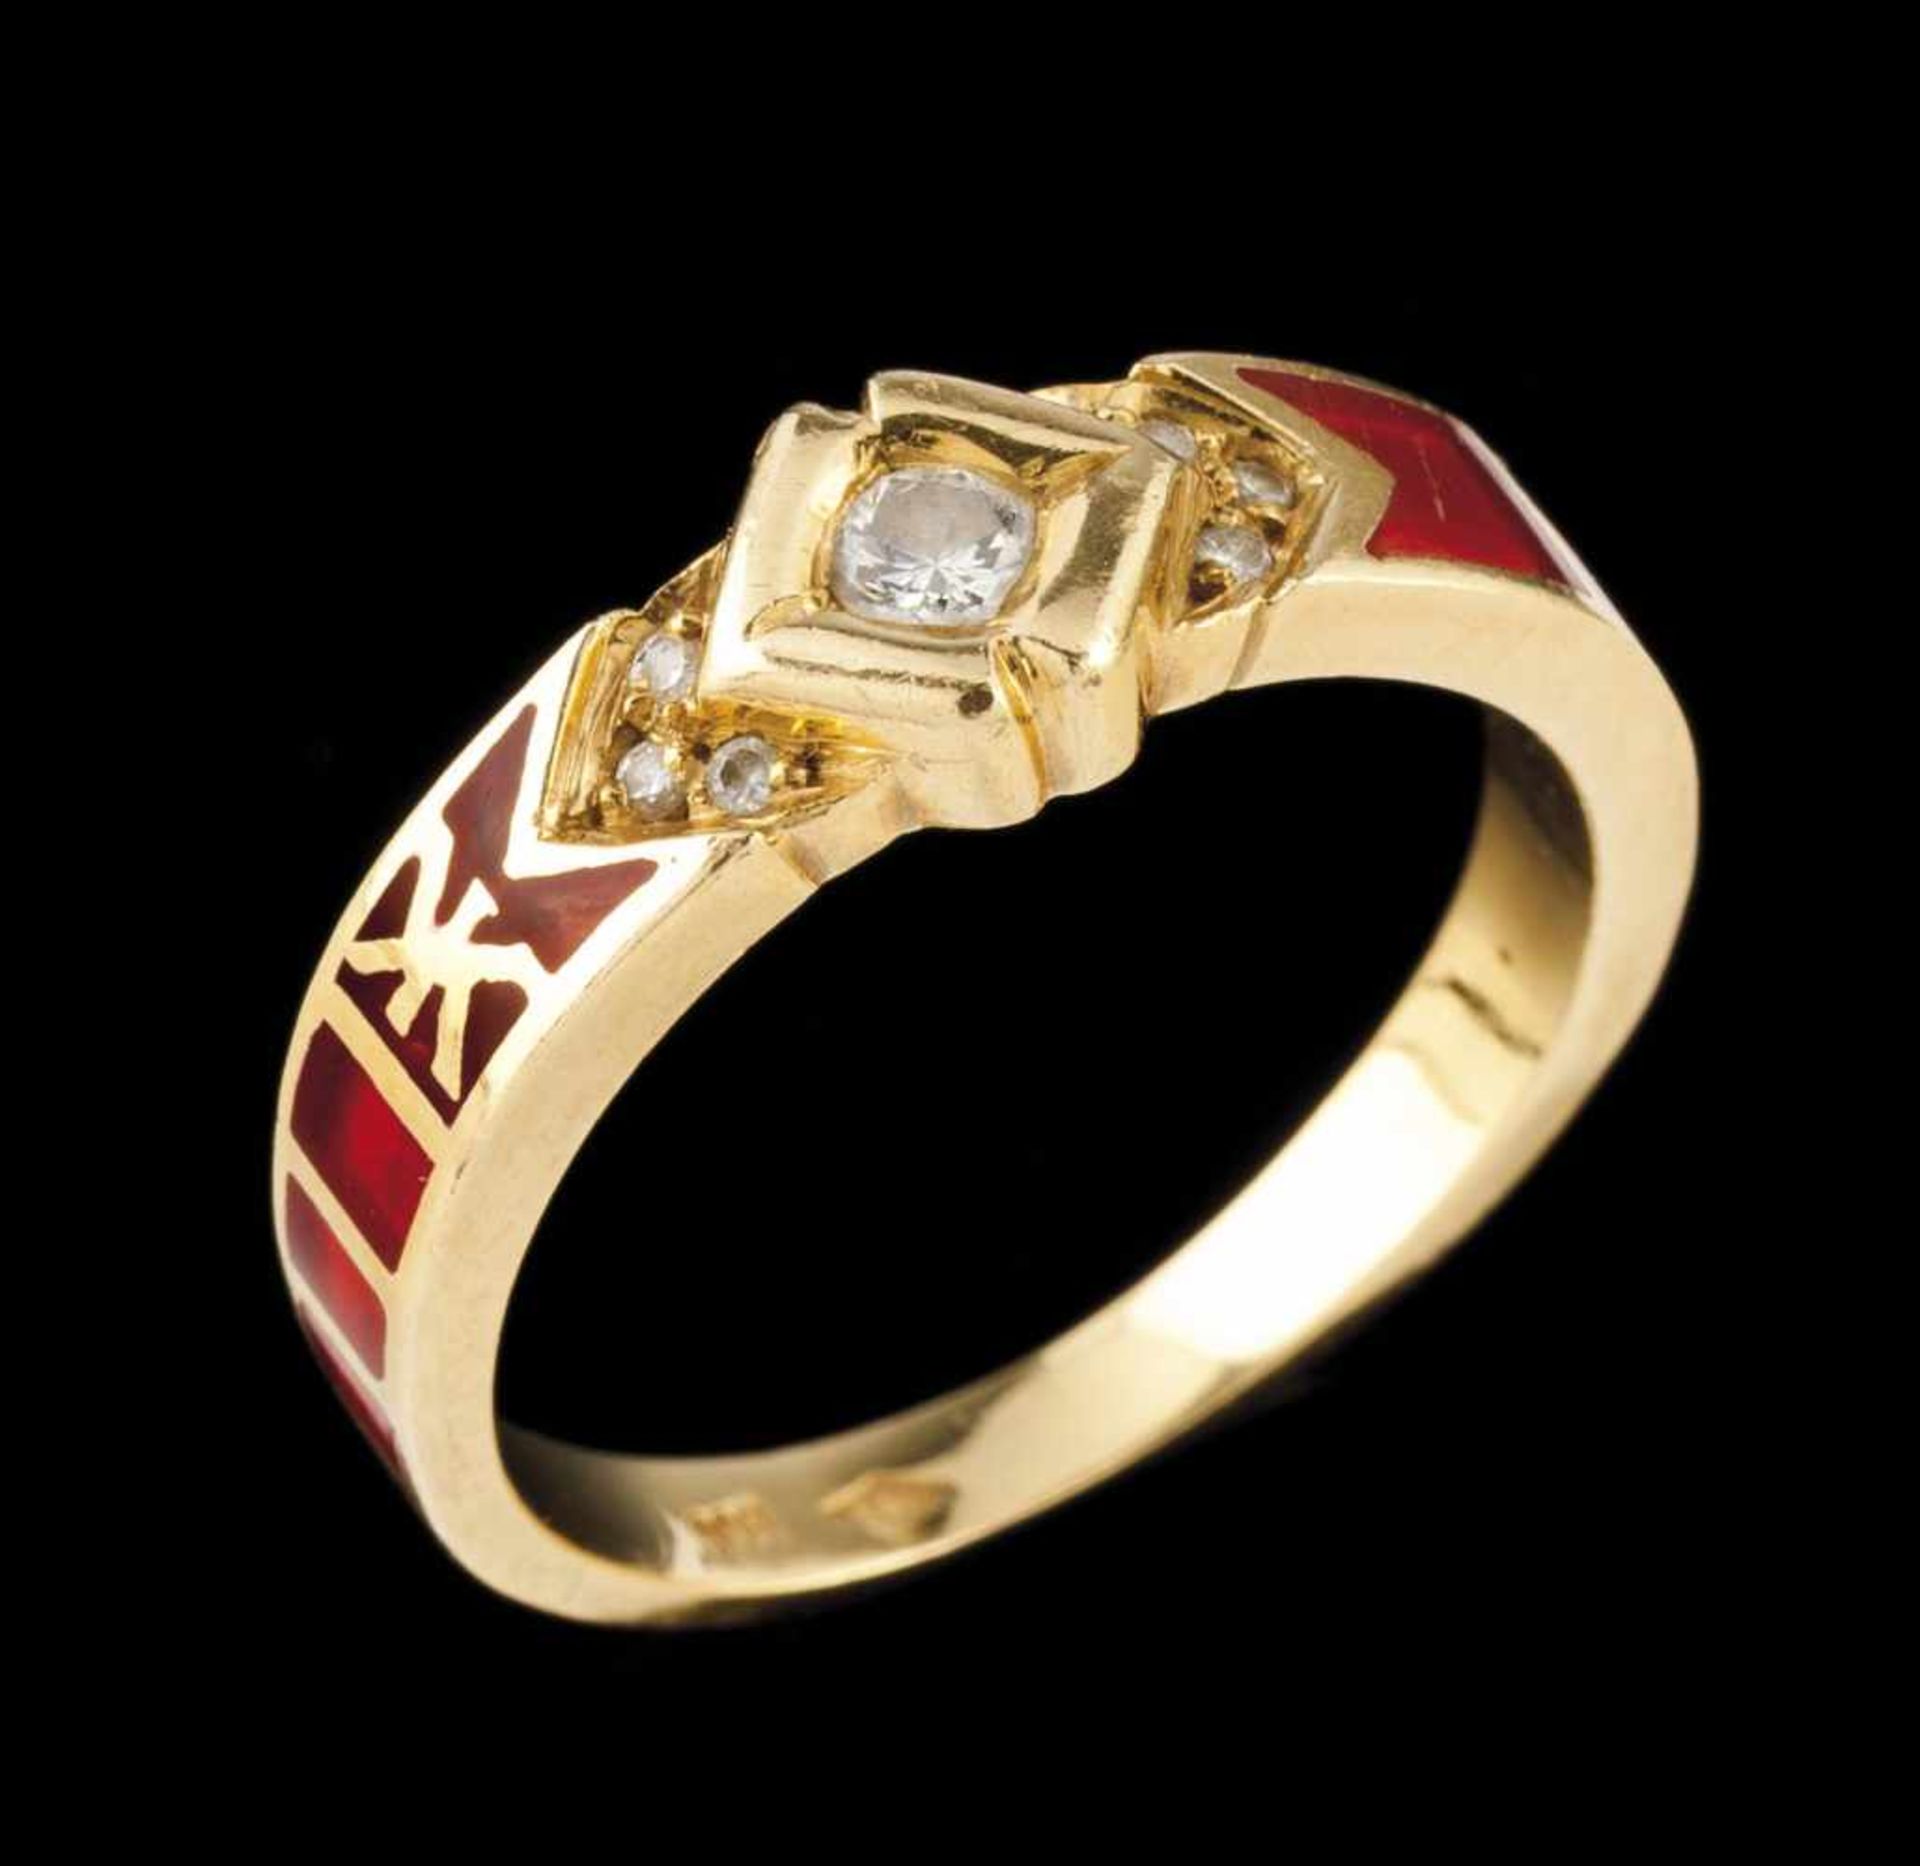 A "Korloff" ring